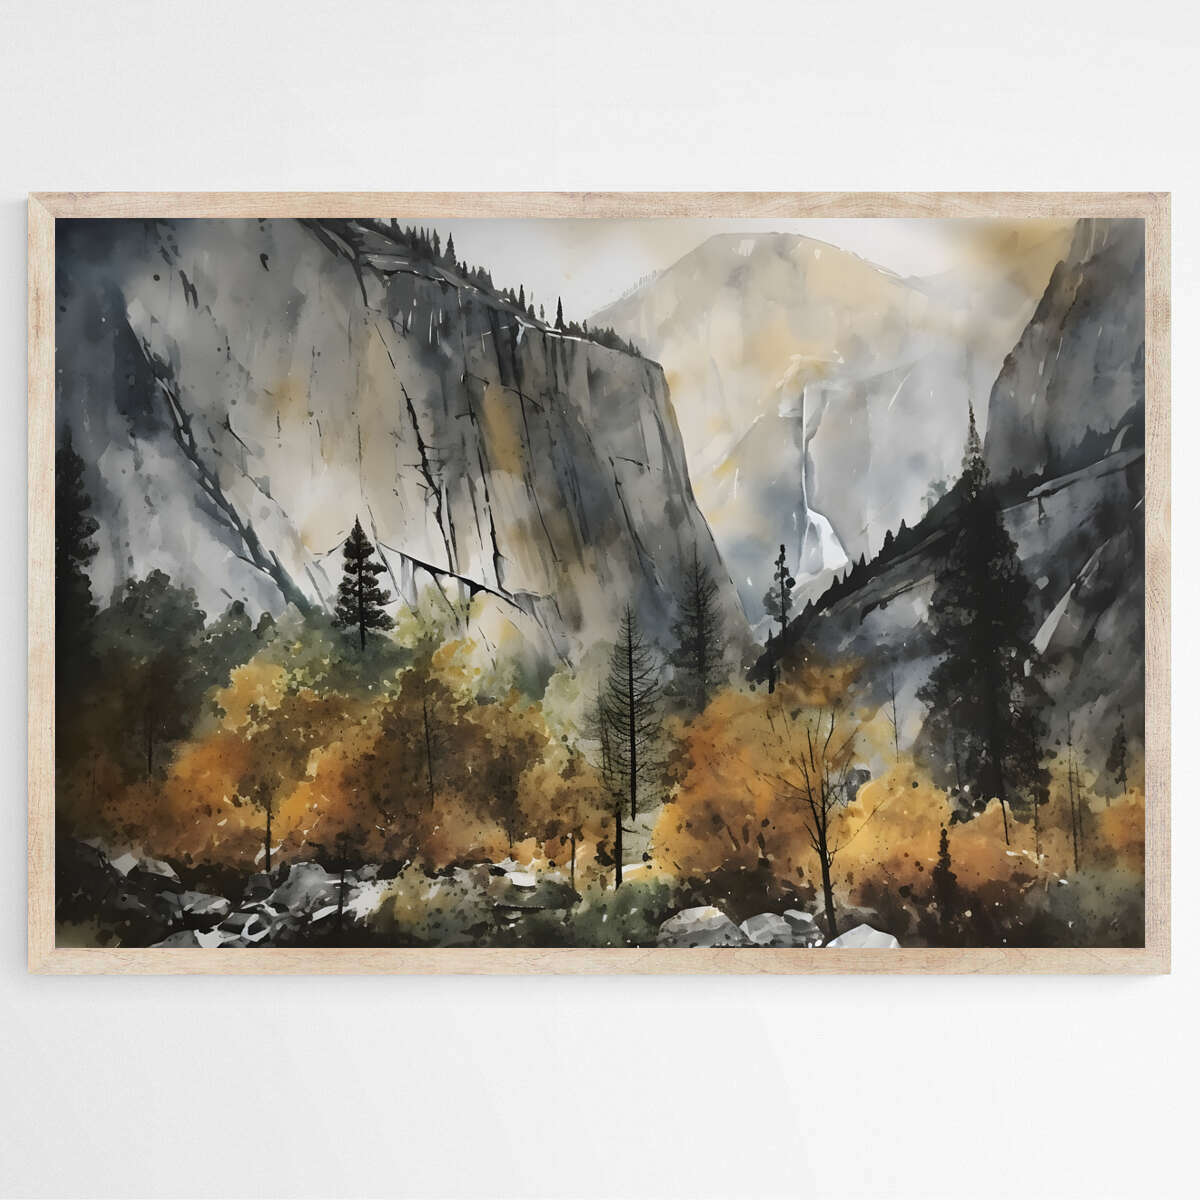 Enchanting Mist Yosemite | Destinations Wall Art Prints - The Canvas Hive